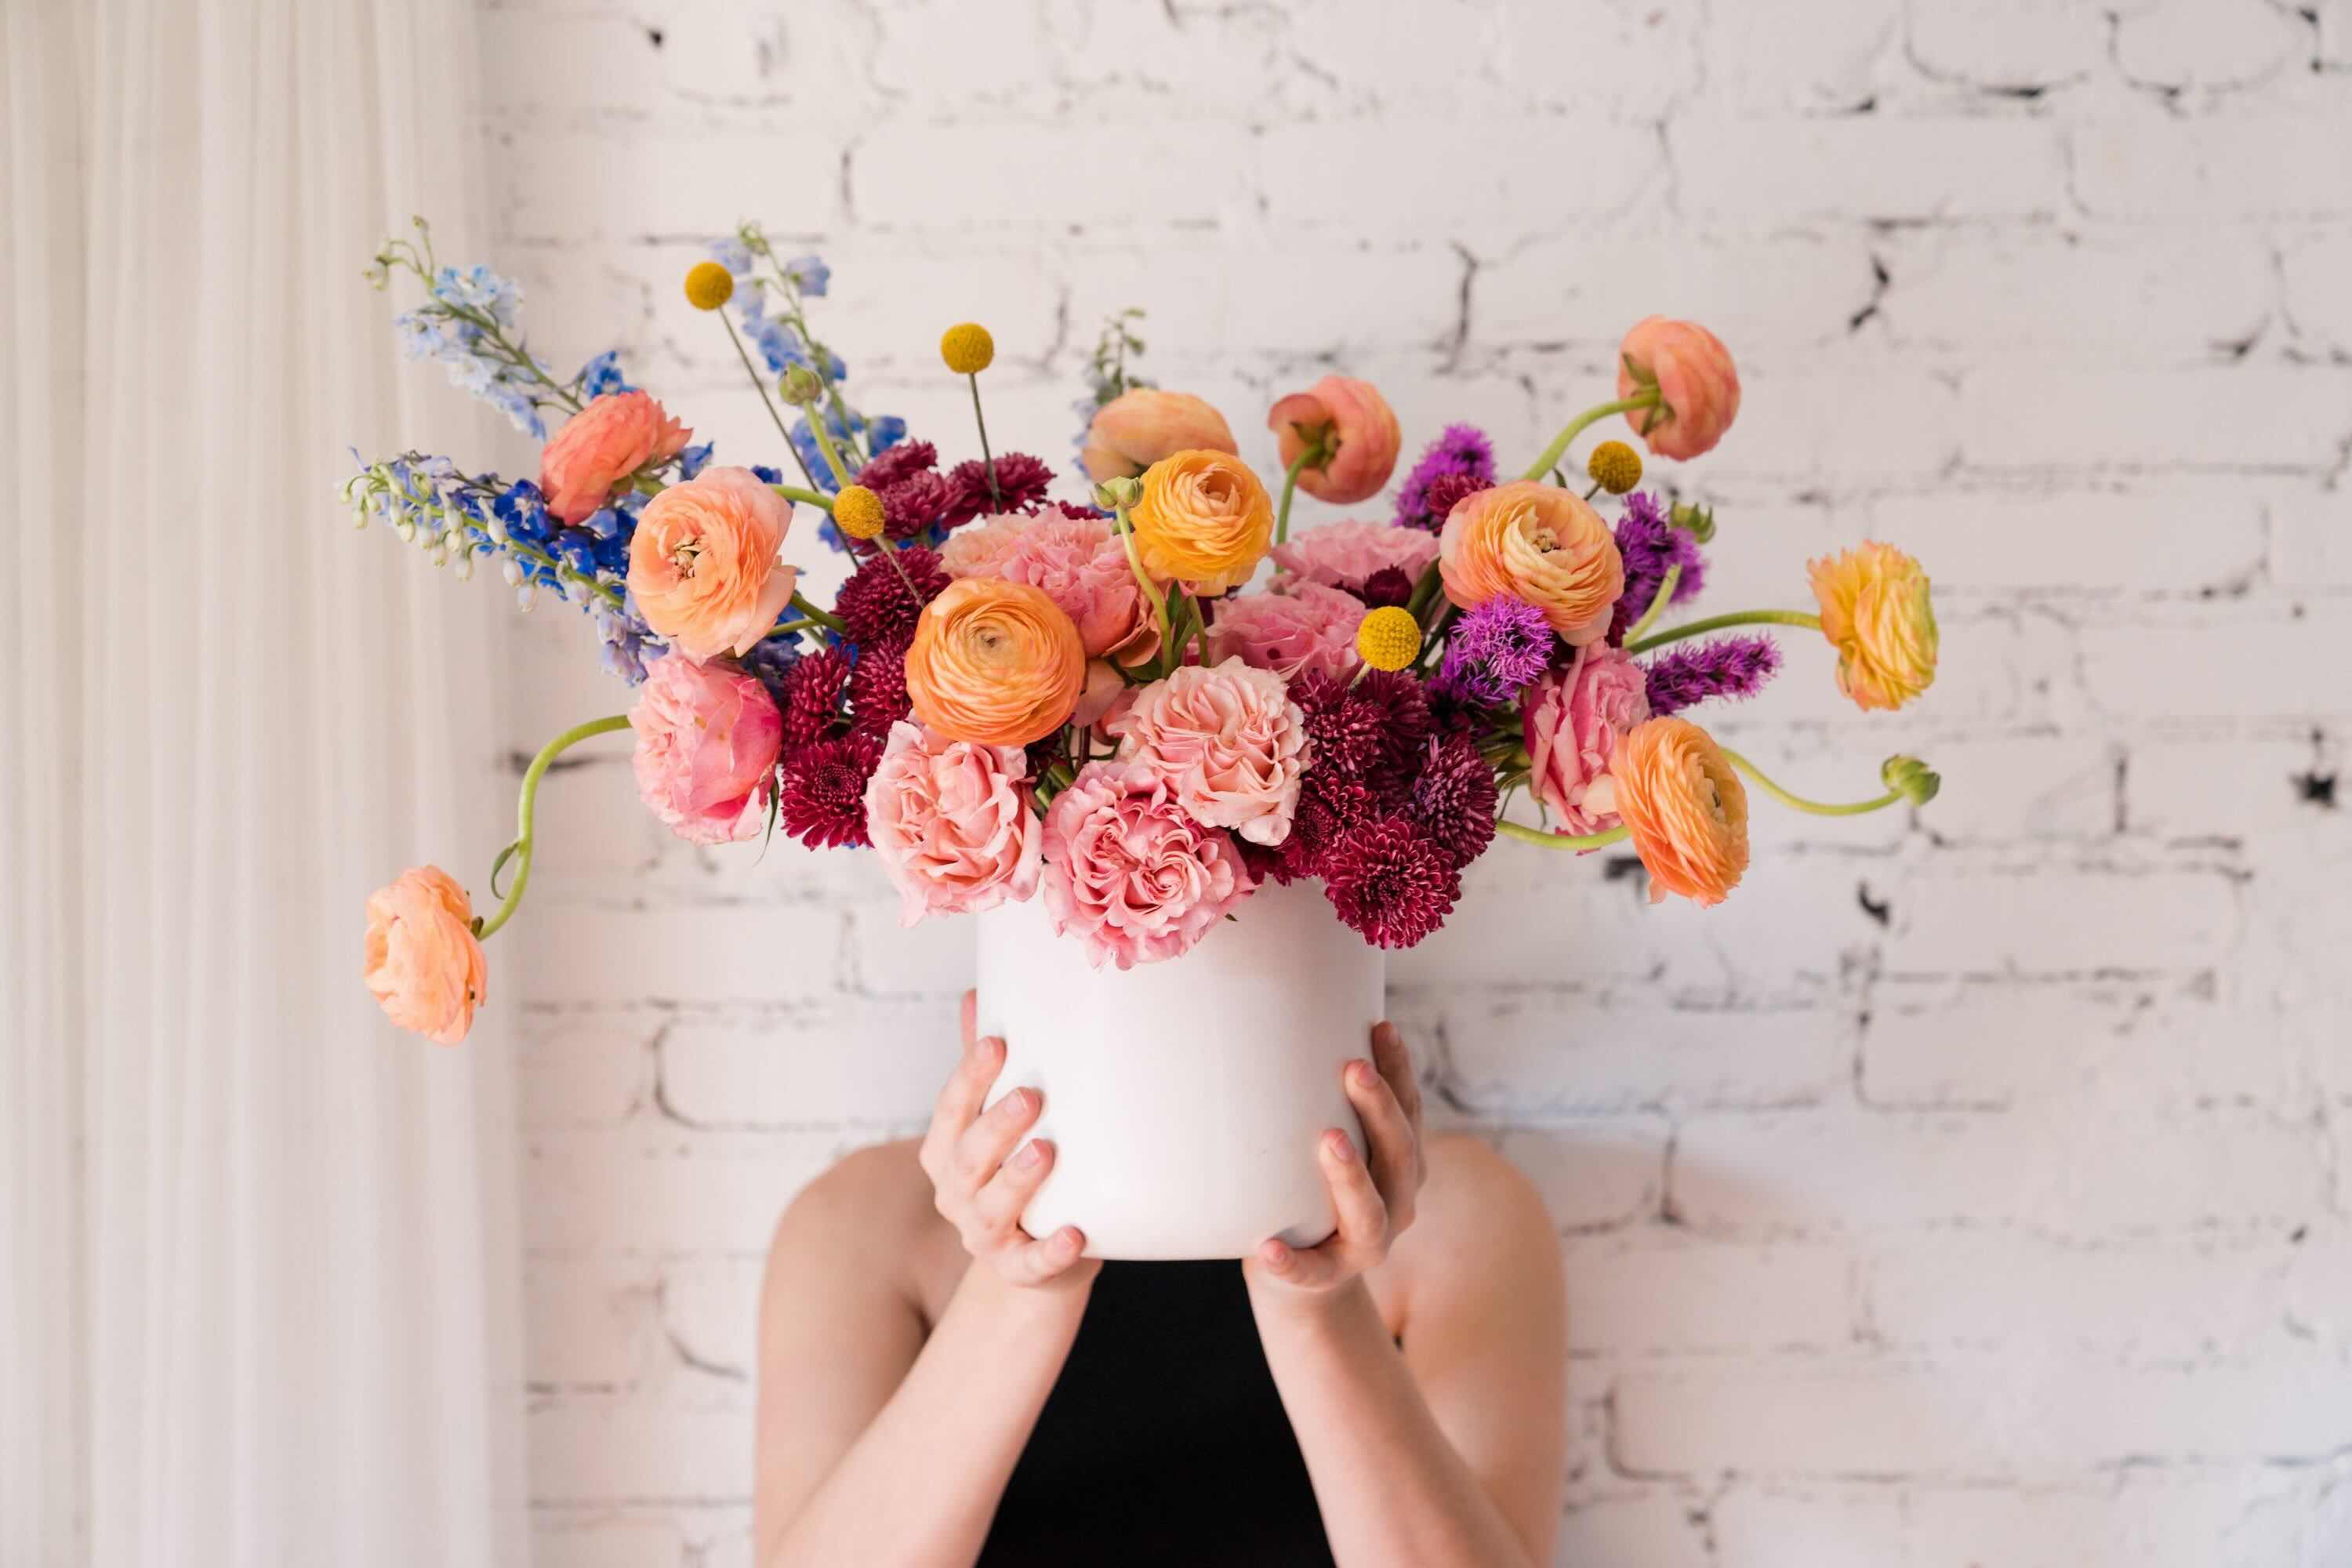 How To Use Vase Fillers In Floral Arrangements